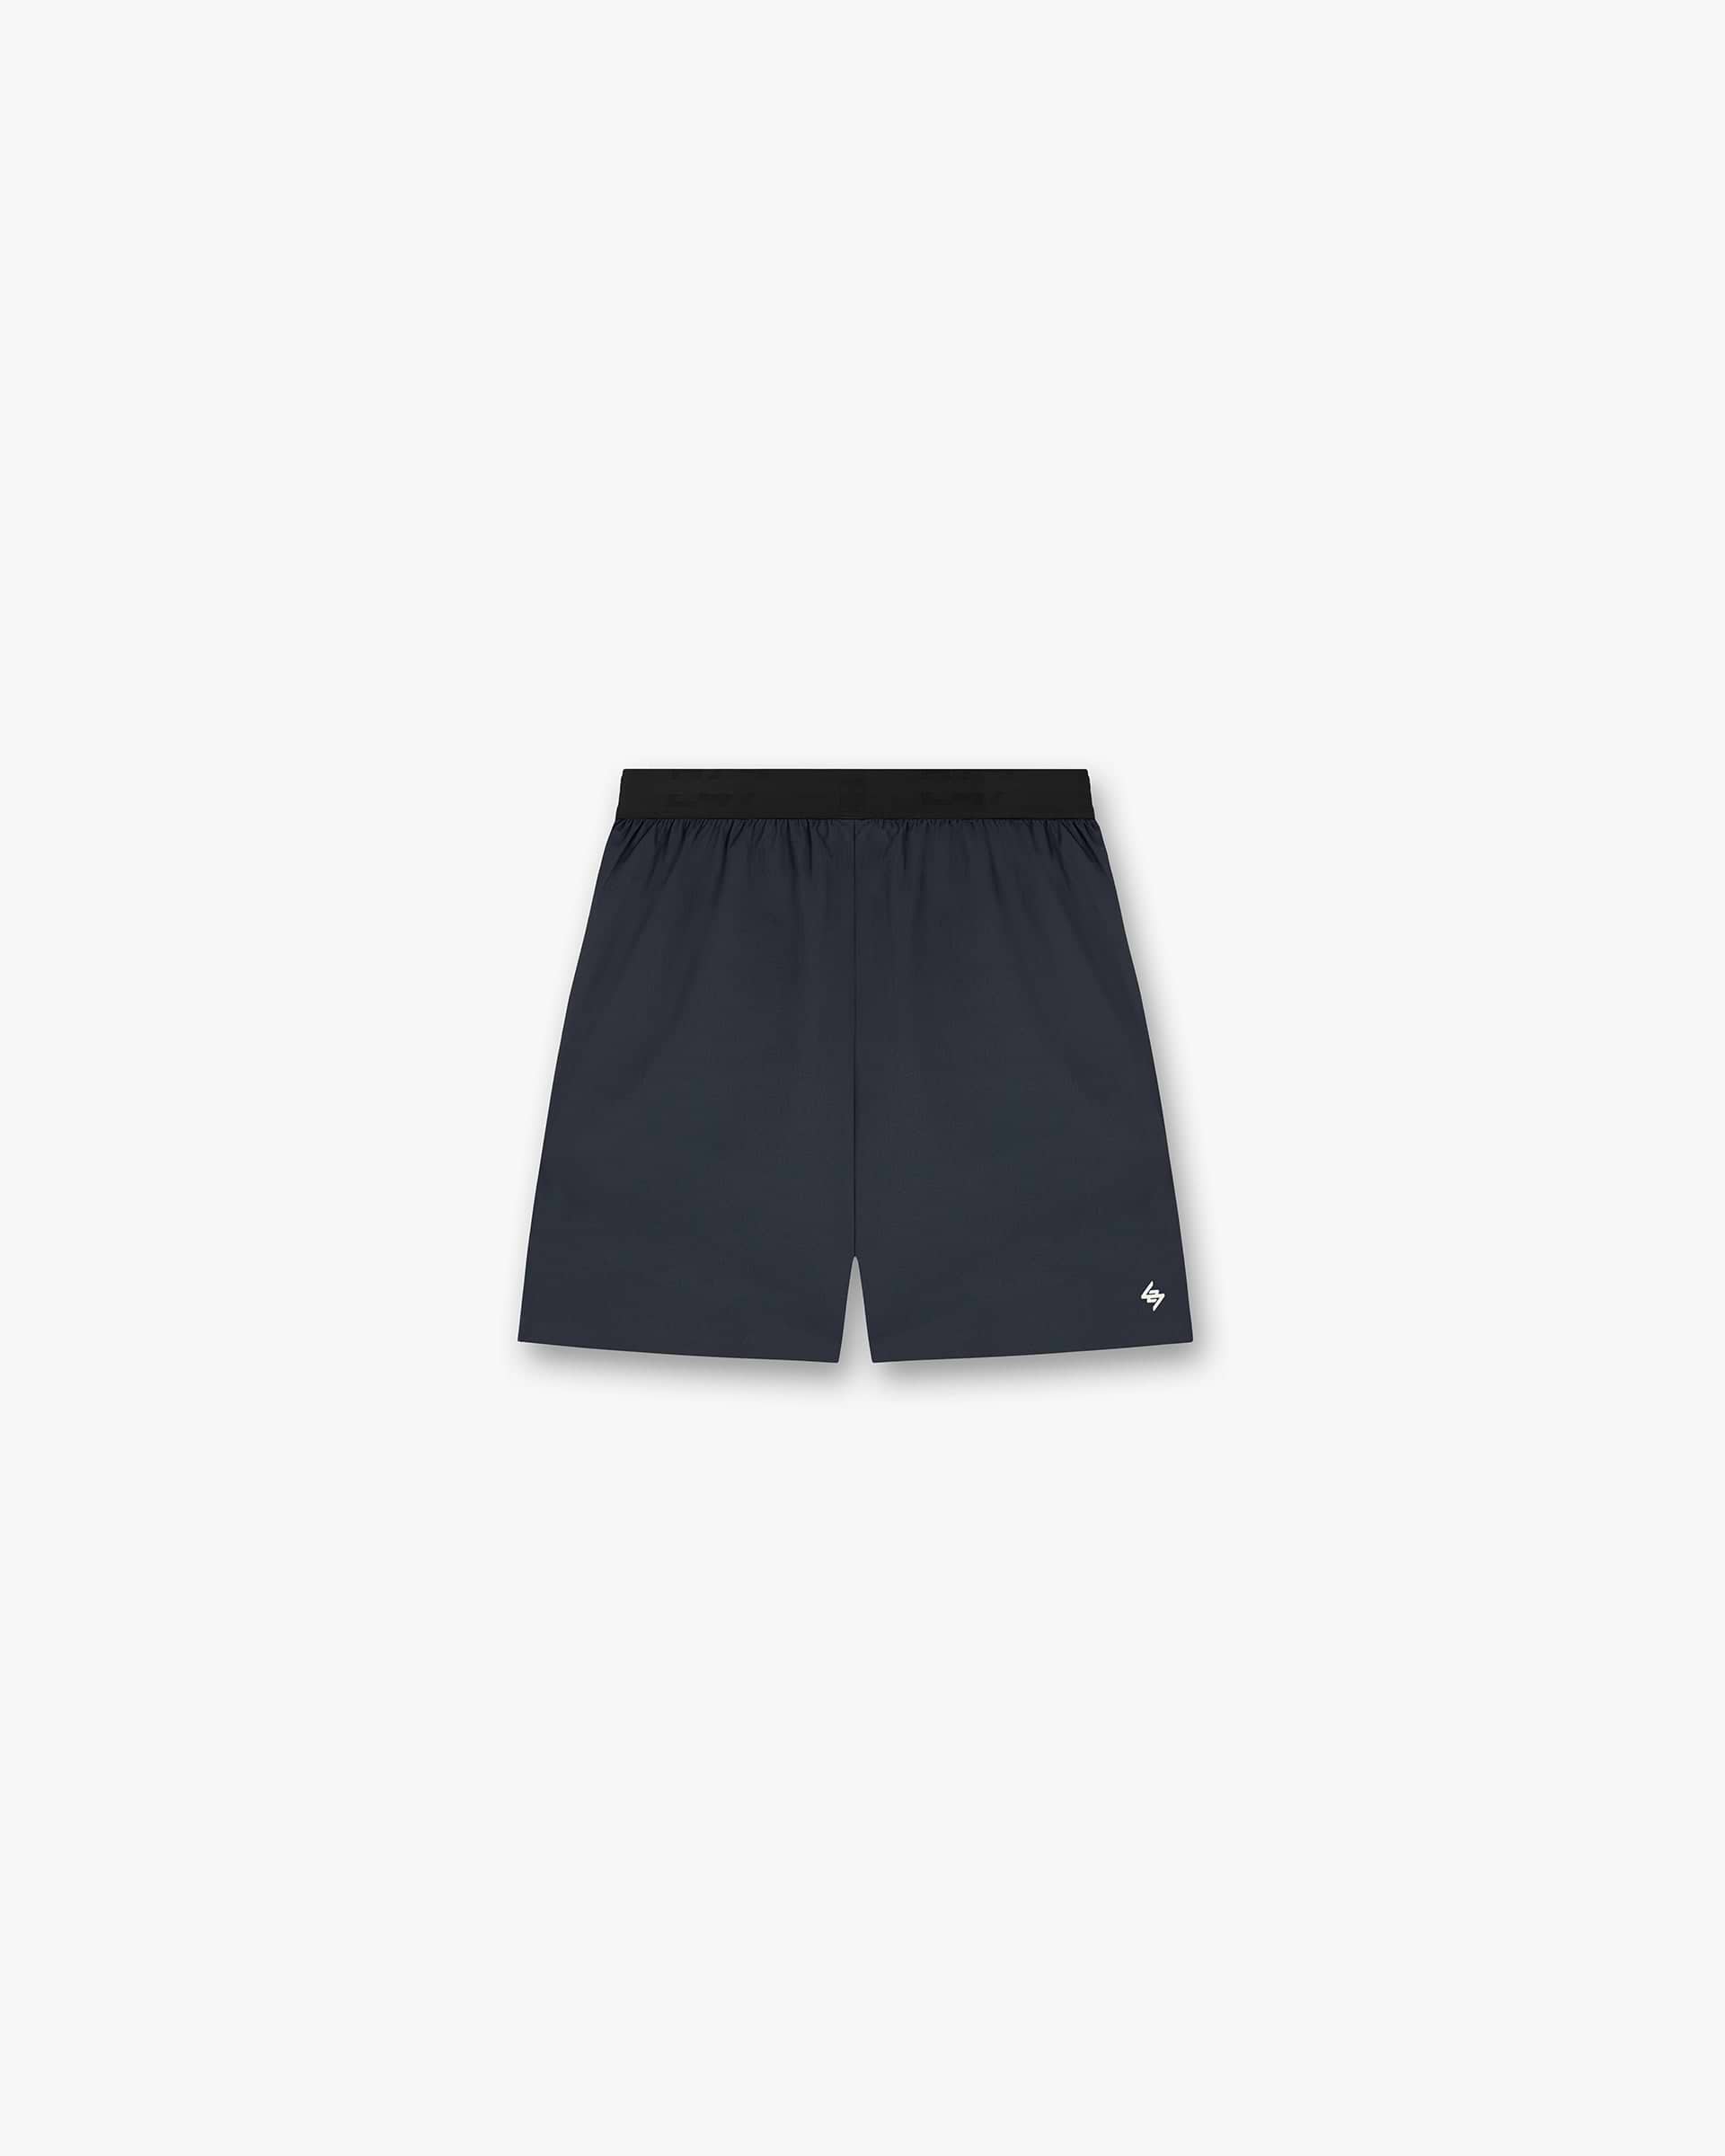 247 Fused Shorts - Navy